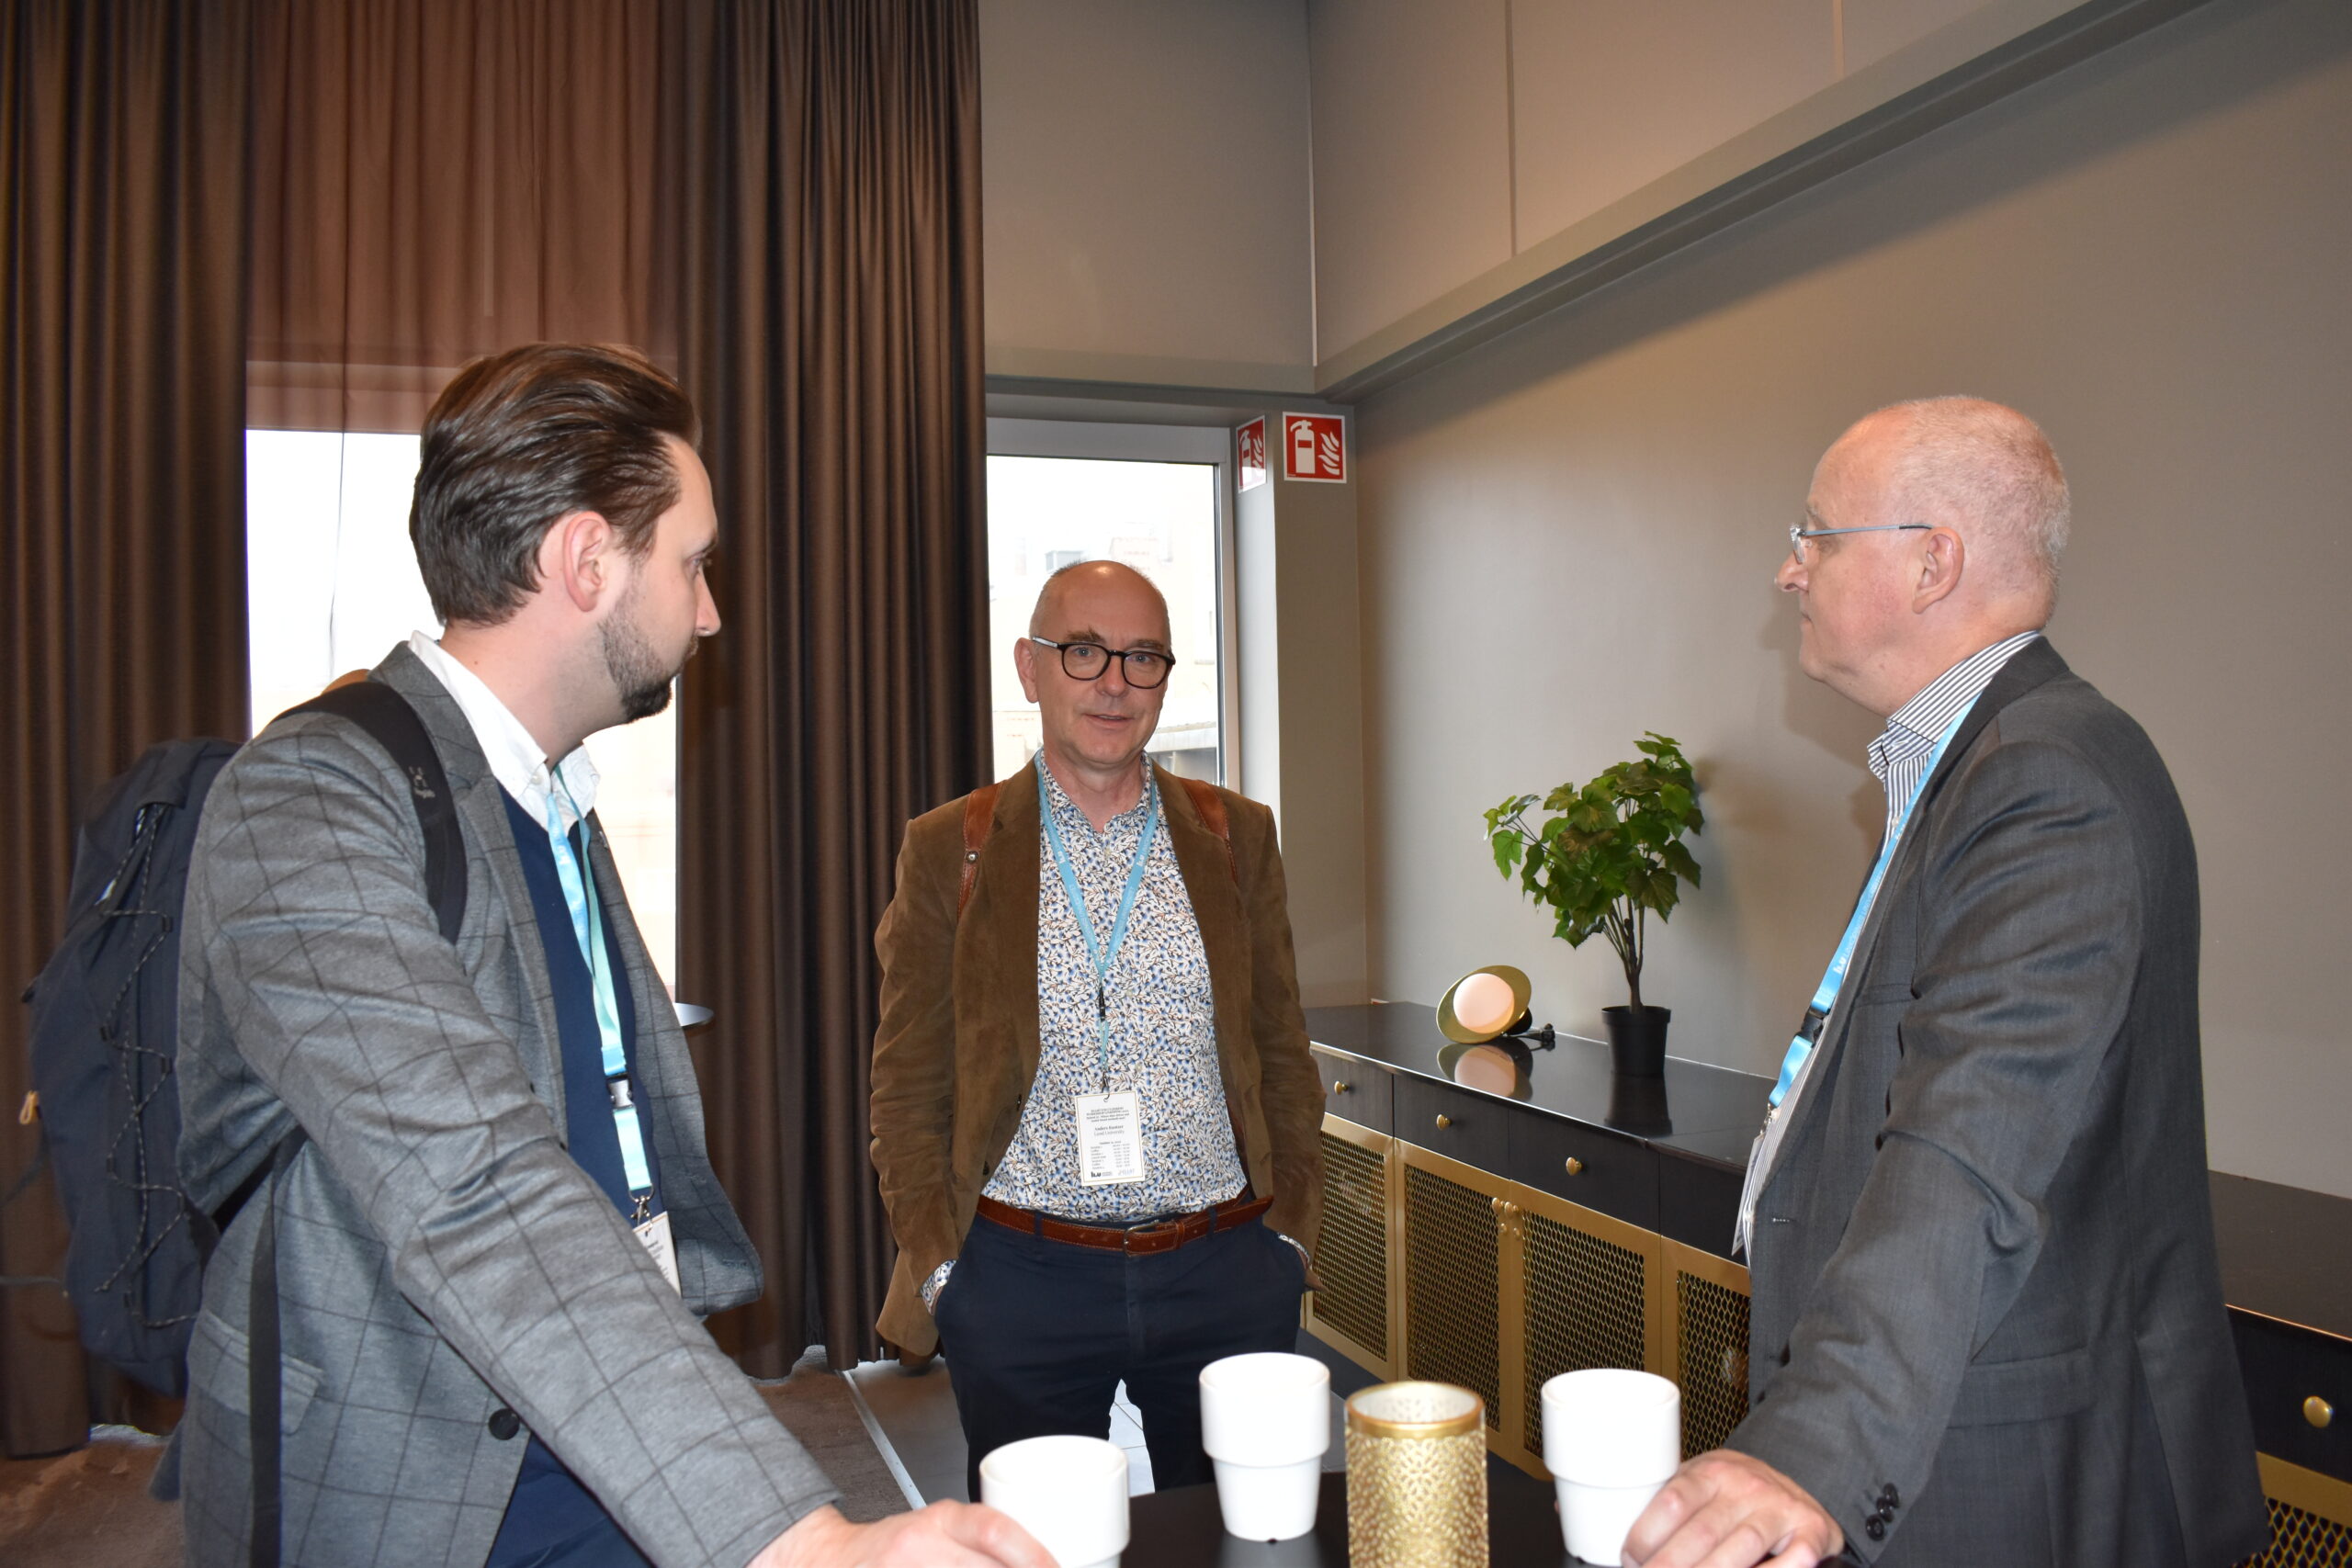 Visiting Scholar Jan Kronqvist, Invited Speaker Anders Rantzer and Organizing Committe Member Anders Hansson